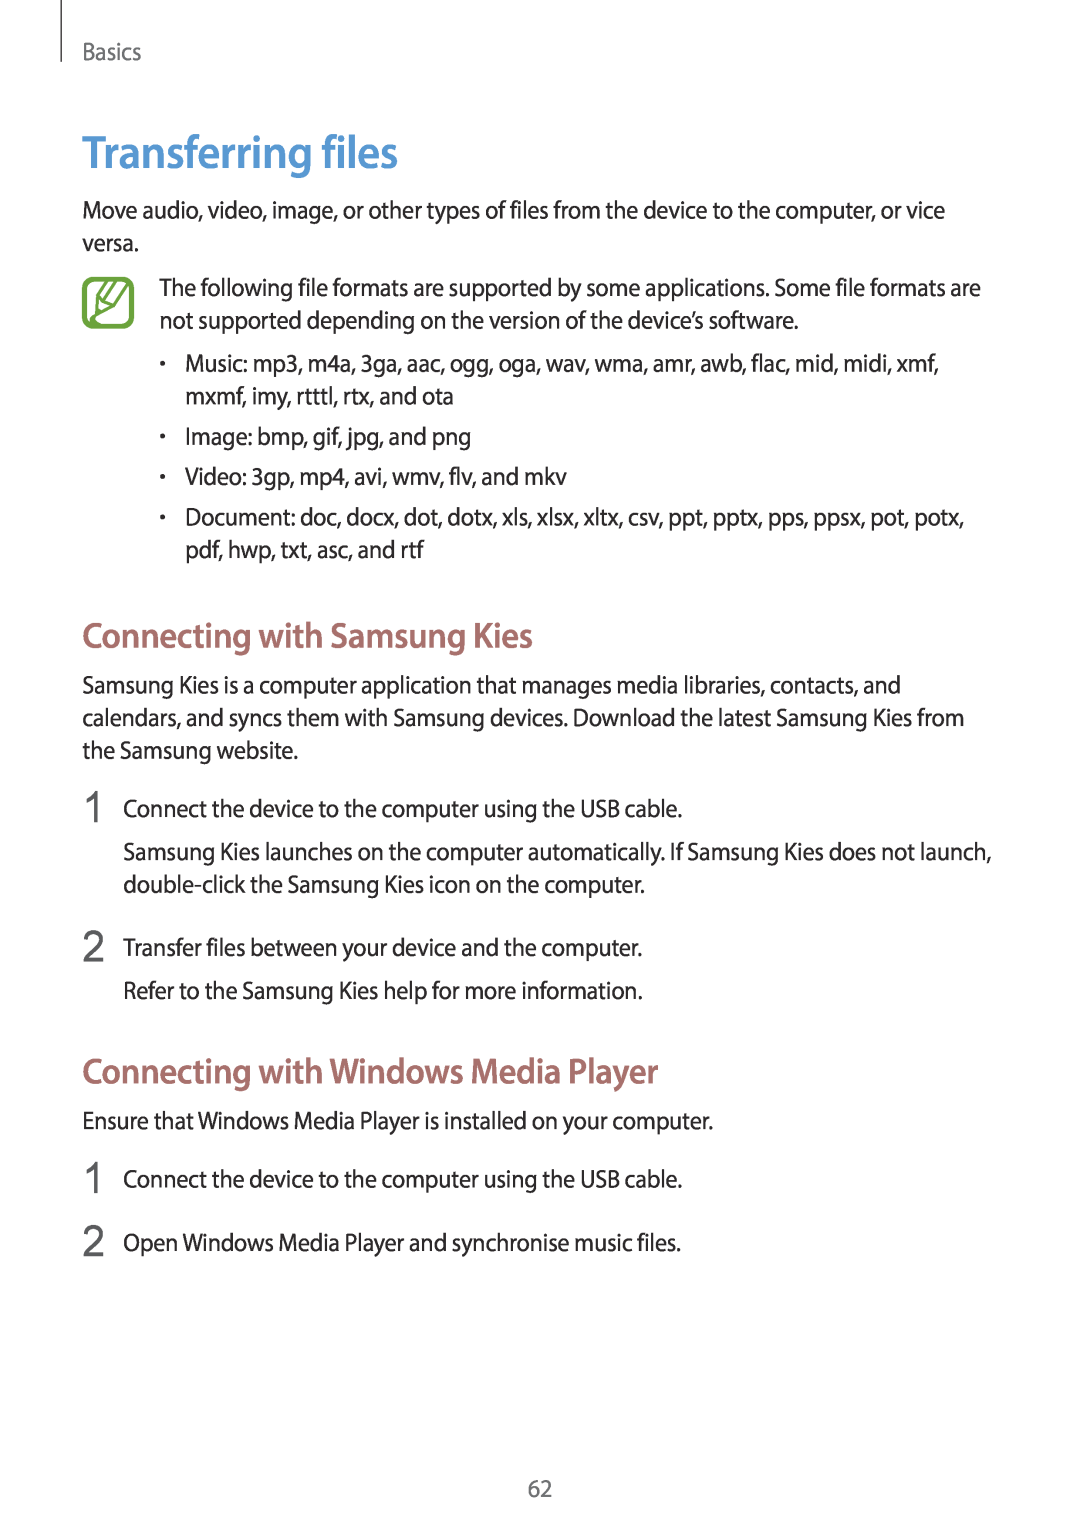 Samsung EK-GC100 user manual Transferring files, Connecting with Samsung Kies, Connecting with Windows Media Player, Basics 